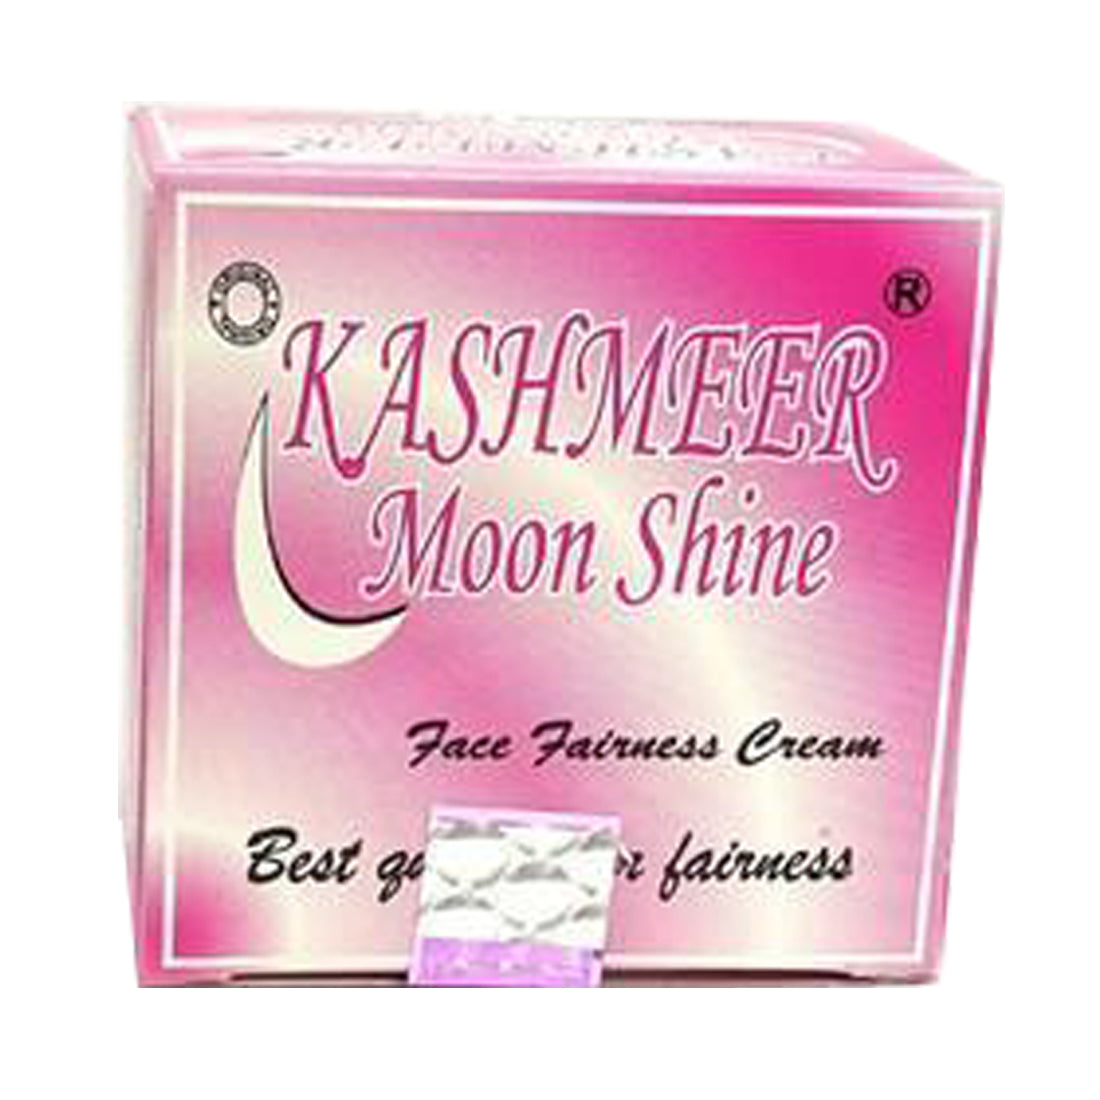 Kashmeer Moon Shine Fairness Cream -20gm